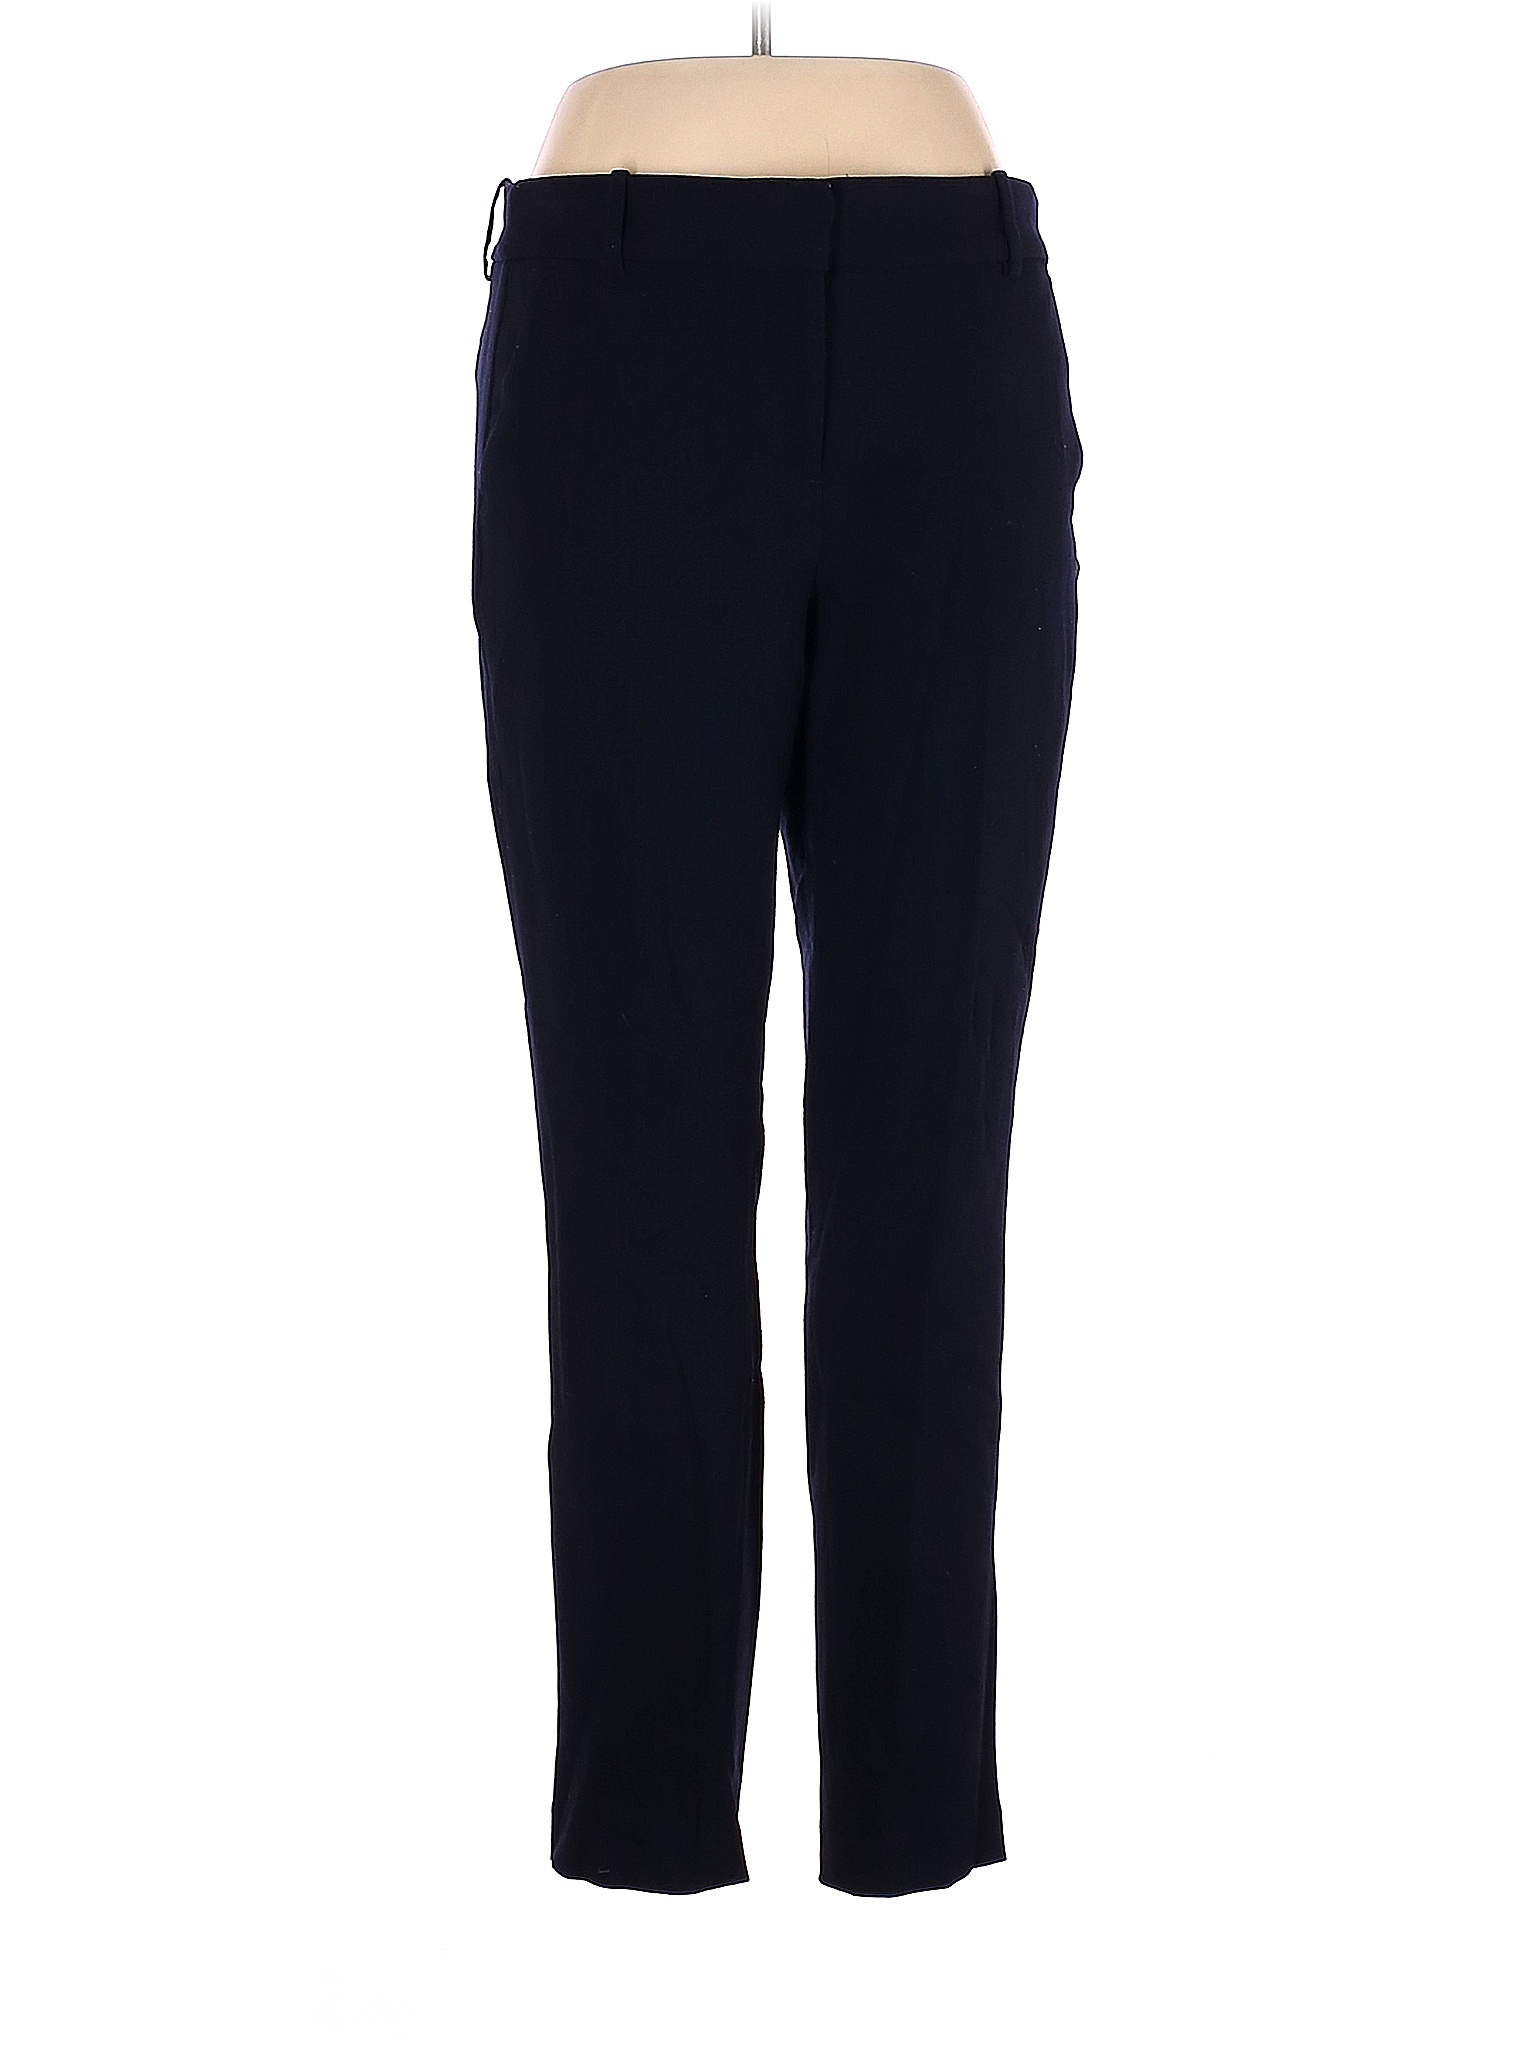 J.Crew Solid Black Blue Dress Pants Size 12 - 74% off | thredUP